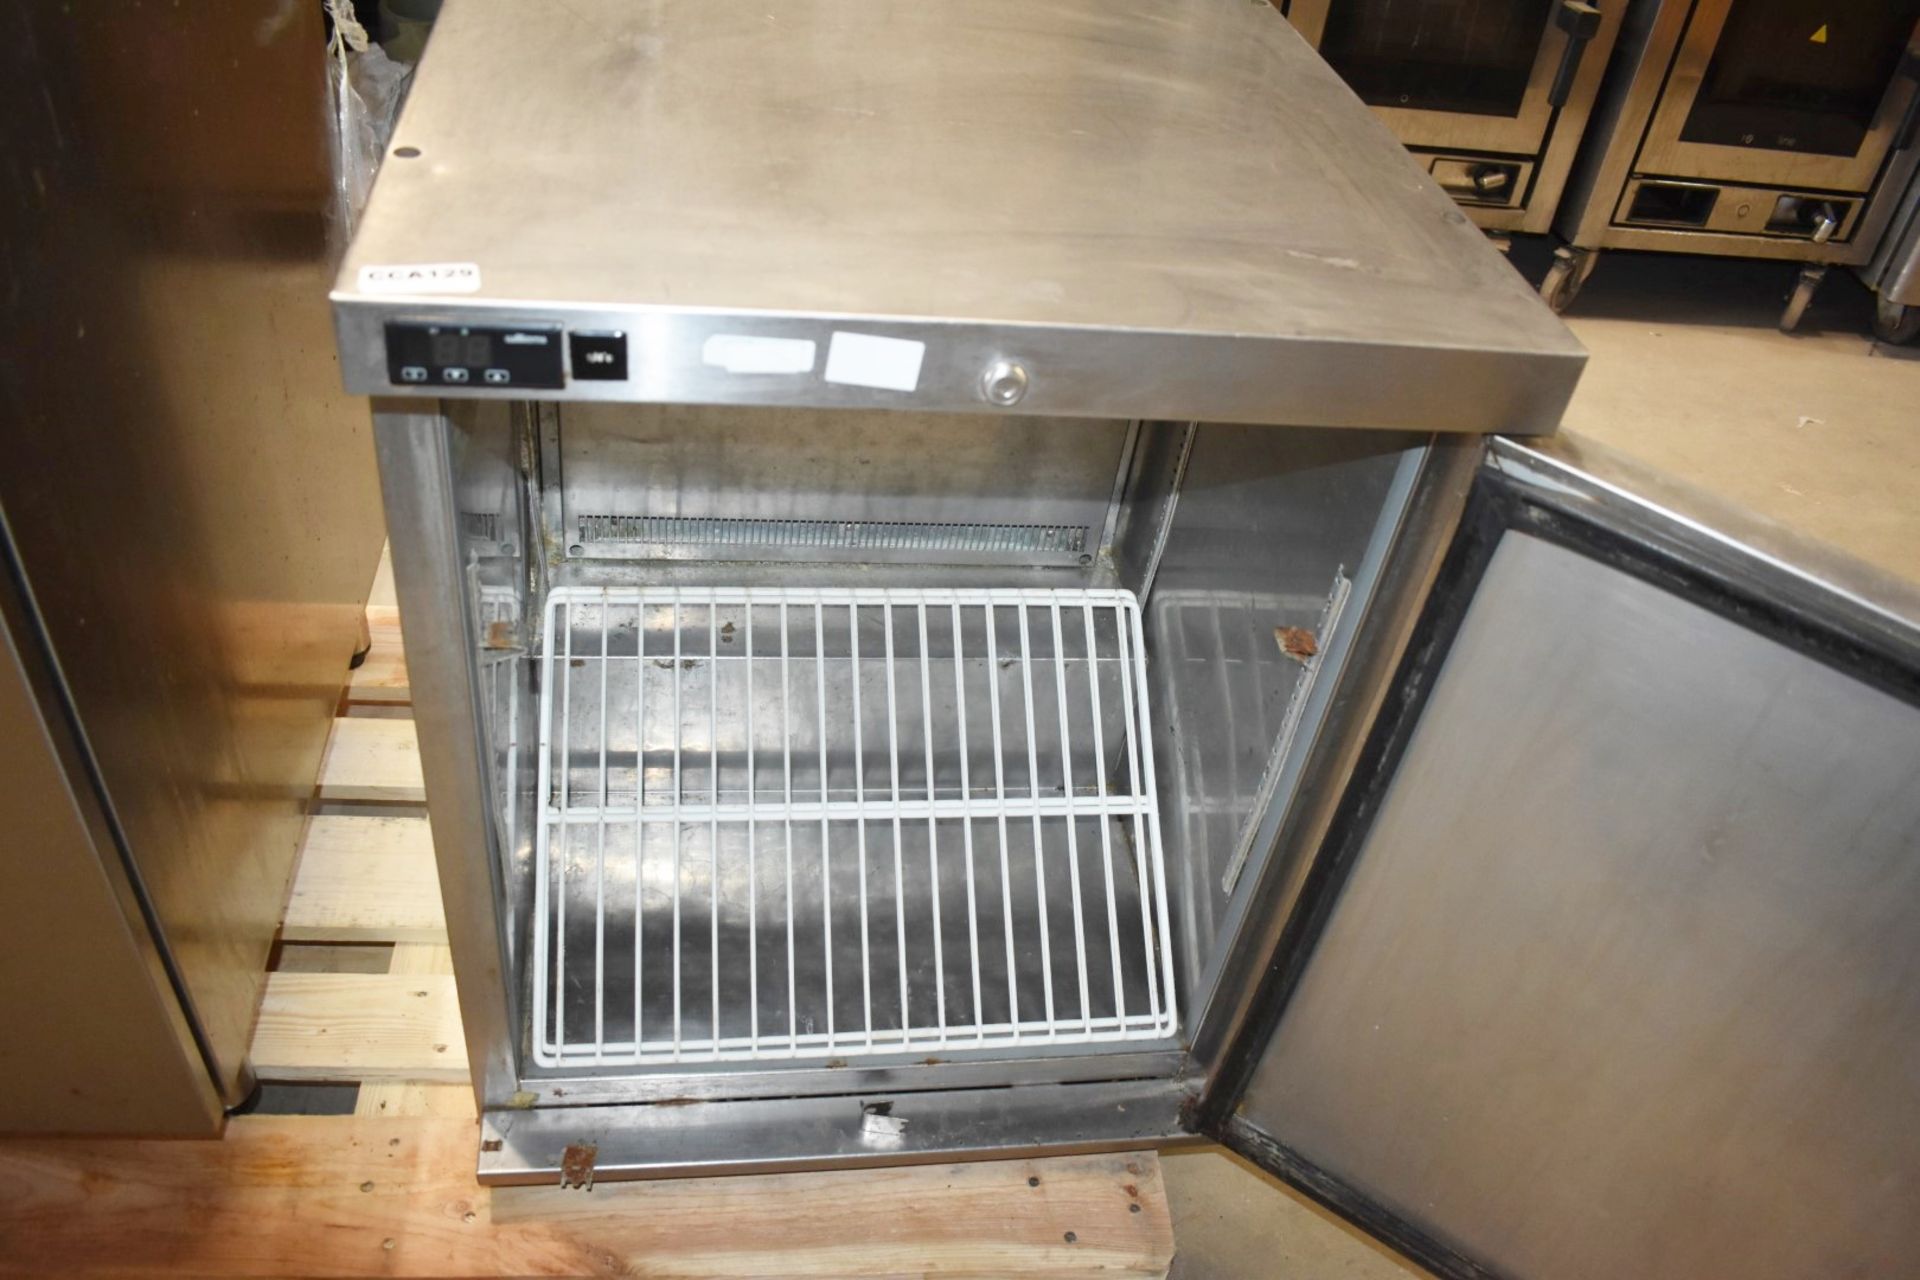 1 x Williams Single Door Undercounter Refrigerator - Model HA135SS - Dimensions: H79 x W60 x D58 cms - Image 5 of 5